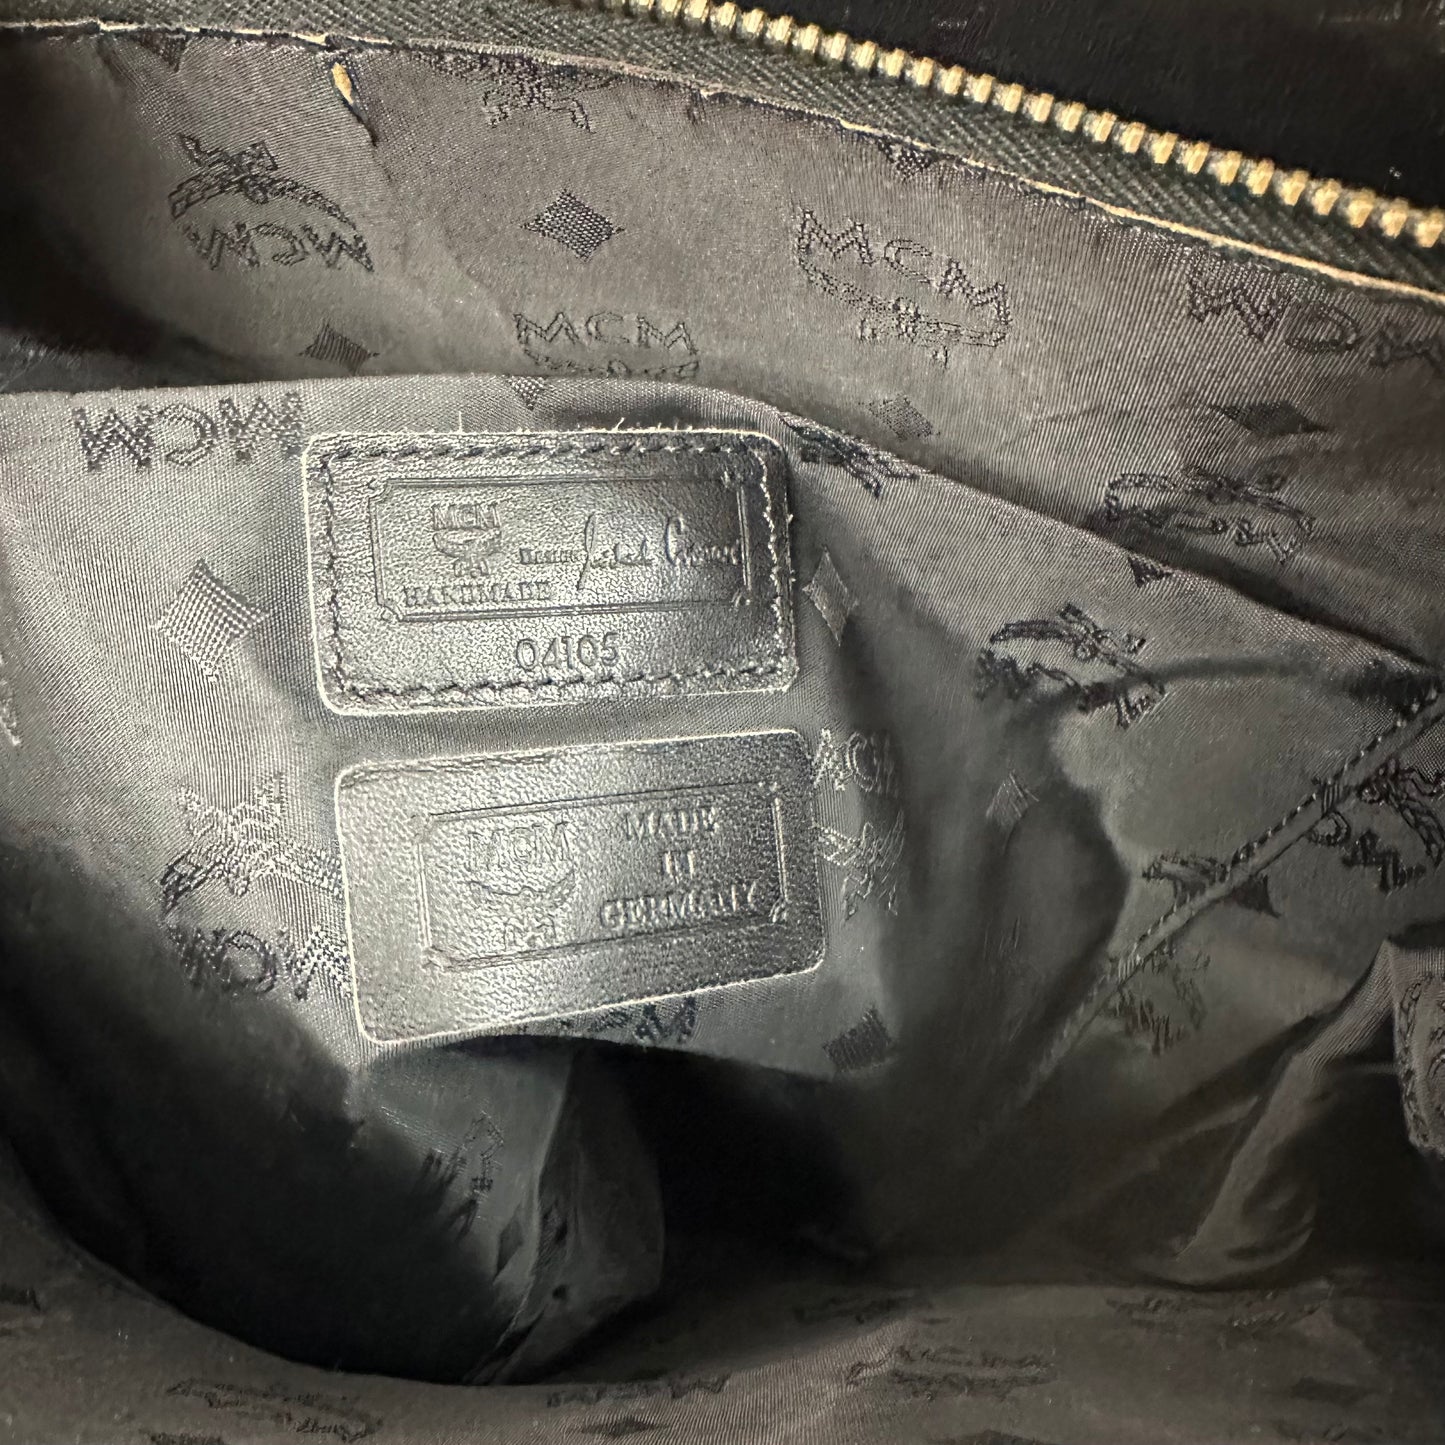 Vintage MCM Black Leather Tote Bag